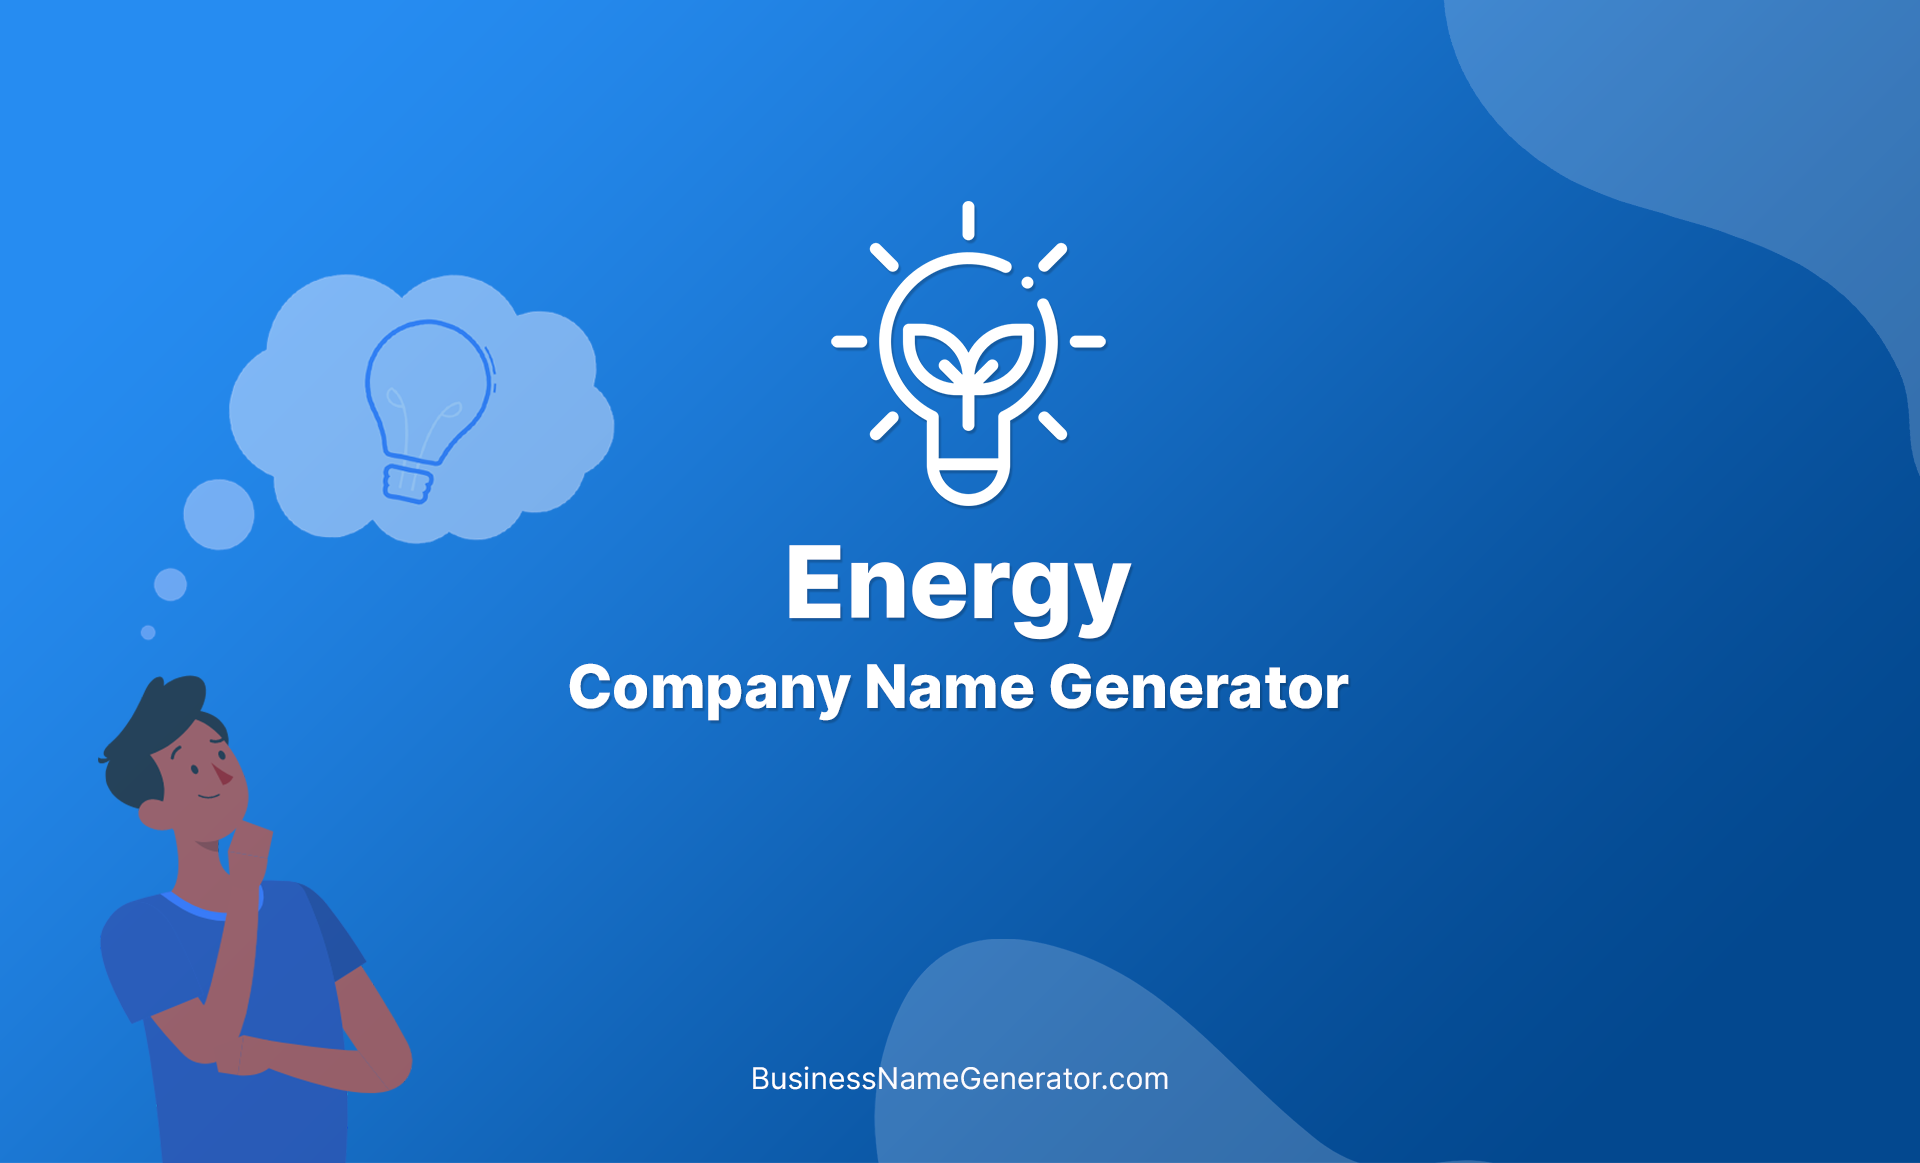 Energy Company Name Generator